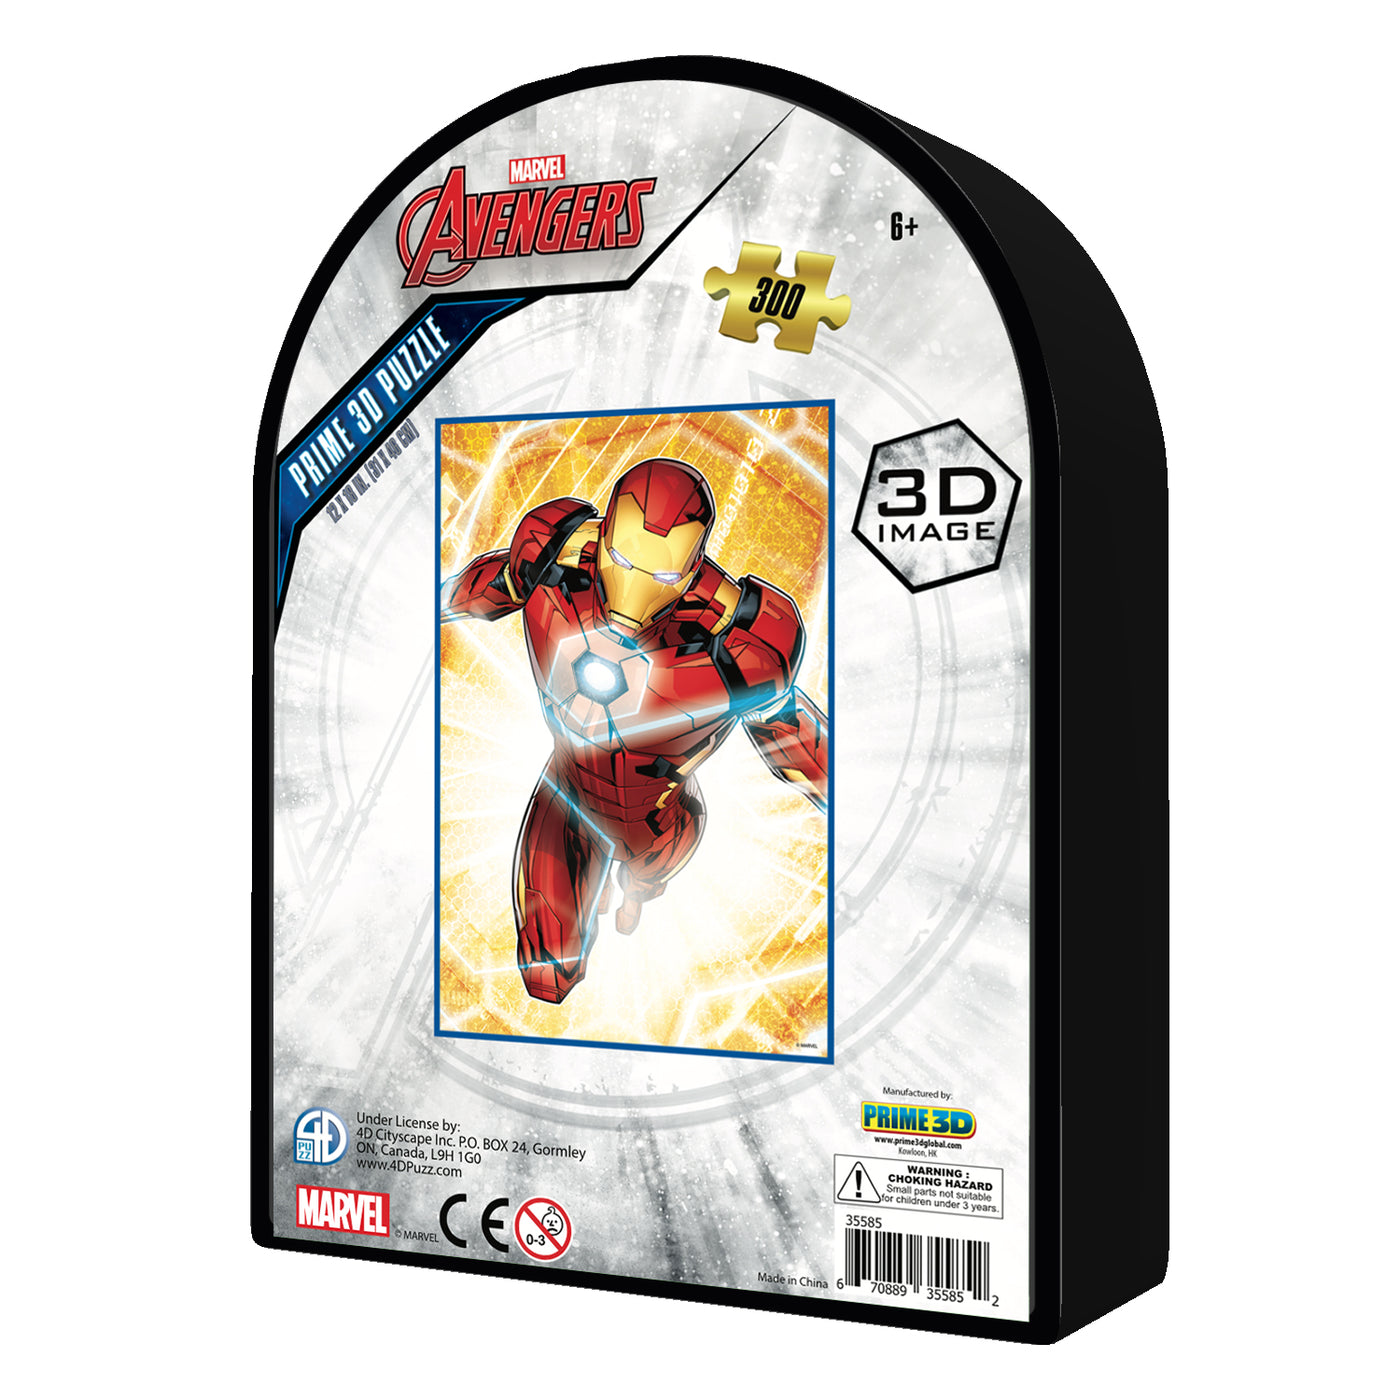 Puzzlr Spider-man Marvel 3D Jigsaw Puzzle 35586 300pc 12x18 – 1Di inc